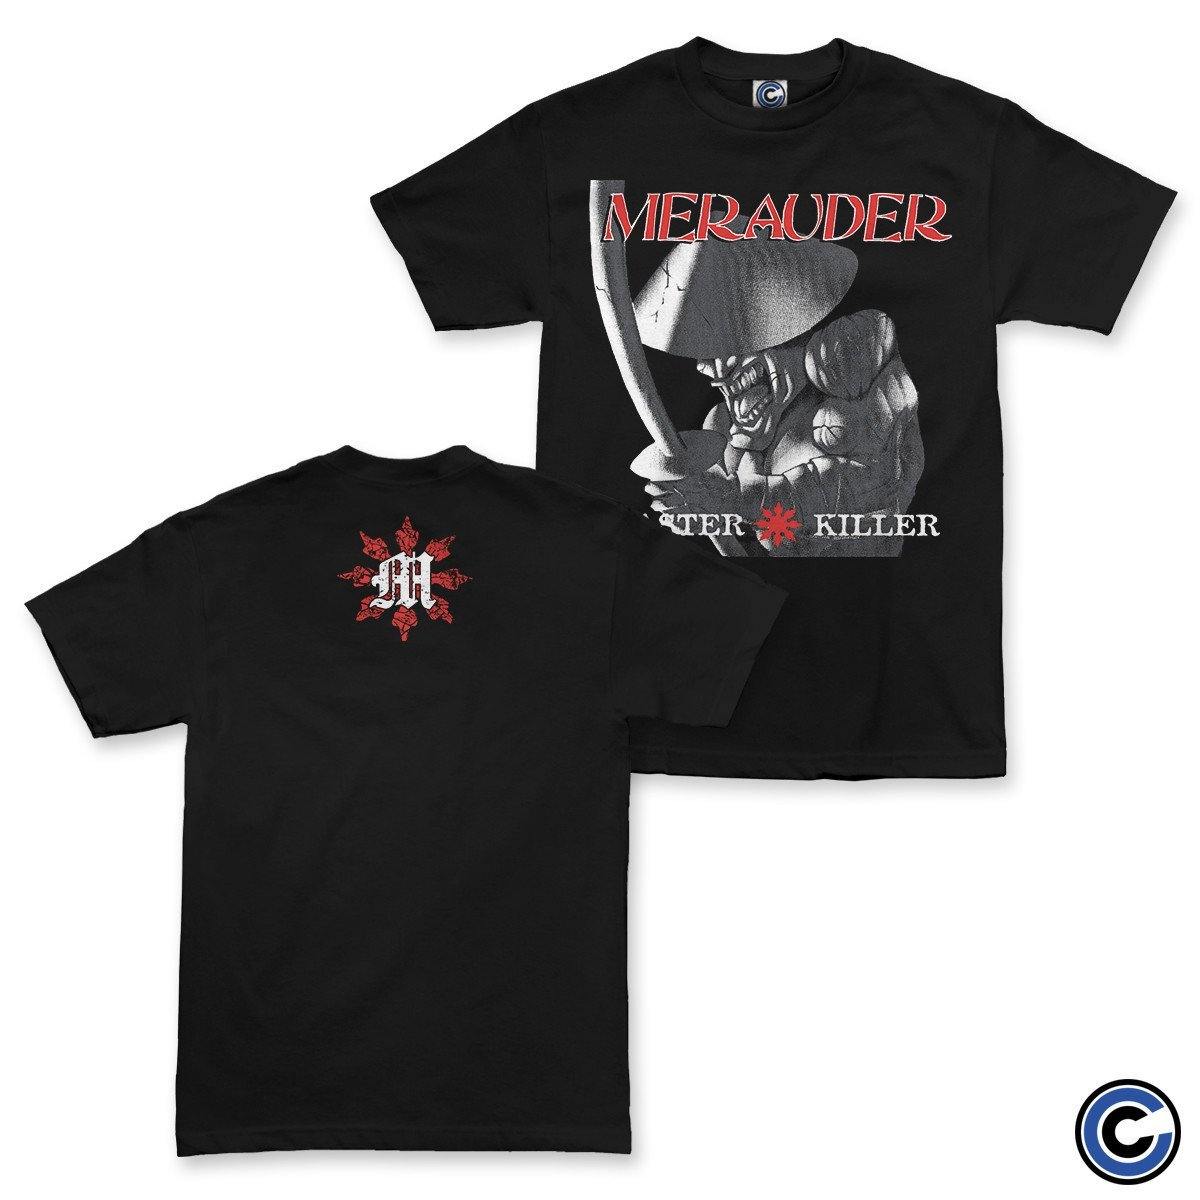 Buy – Merauder "Master Killer" Shirt – Band & Music Merch – Cold Cuts Merch